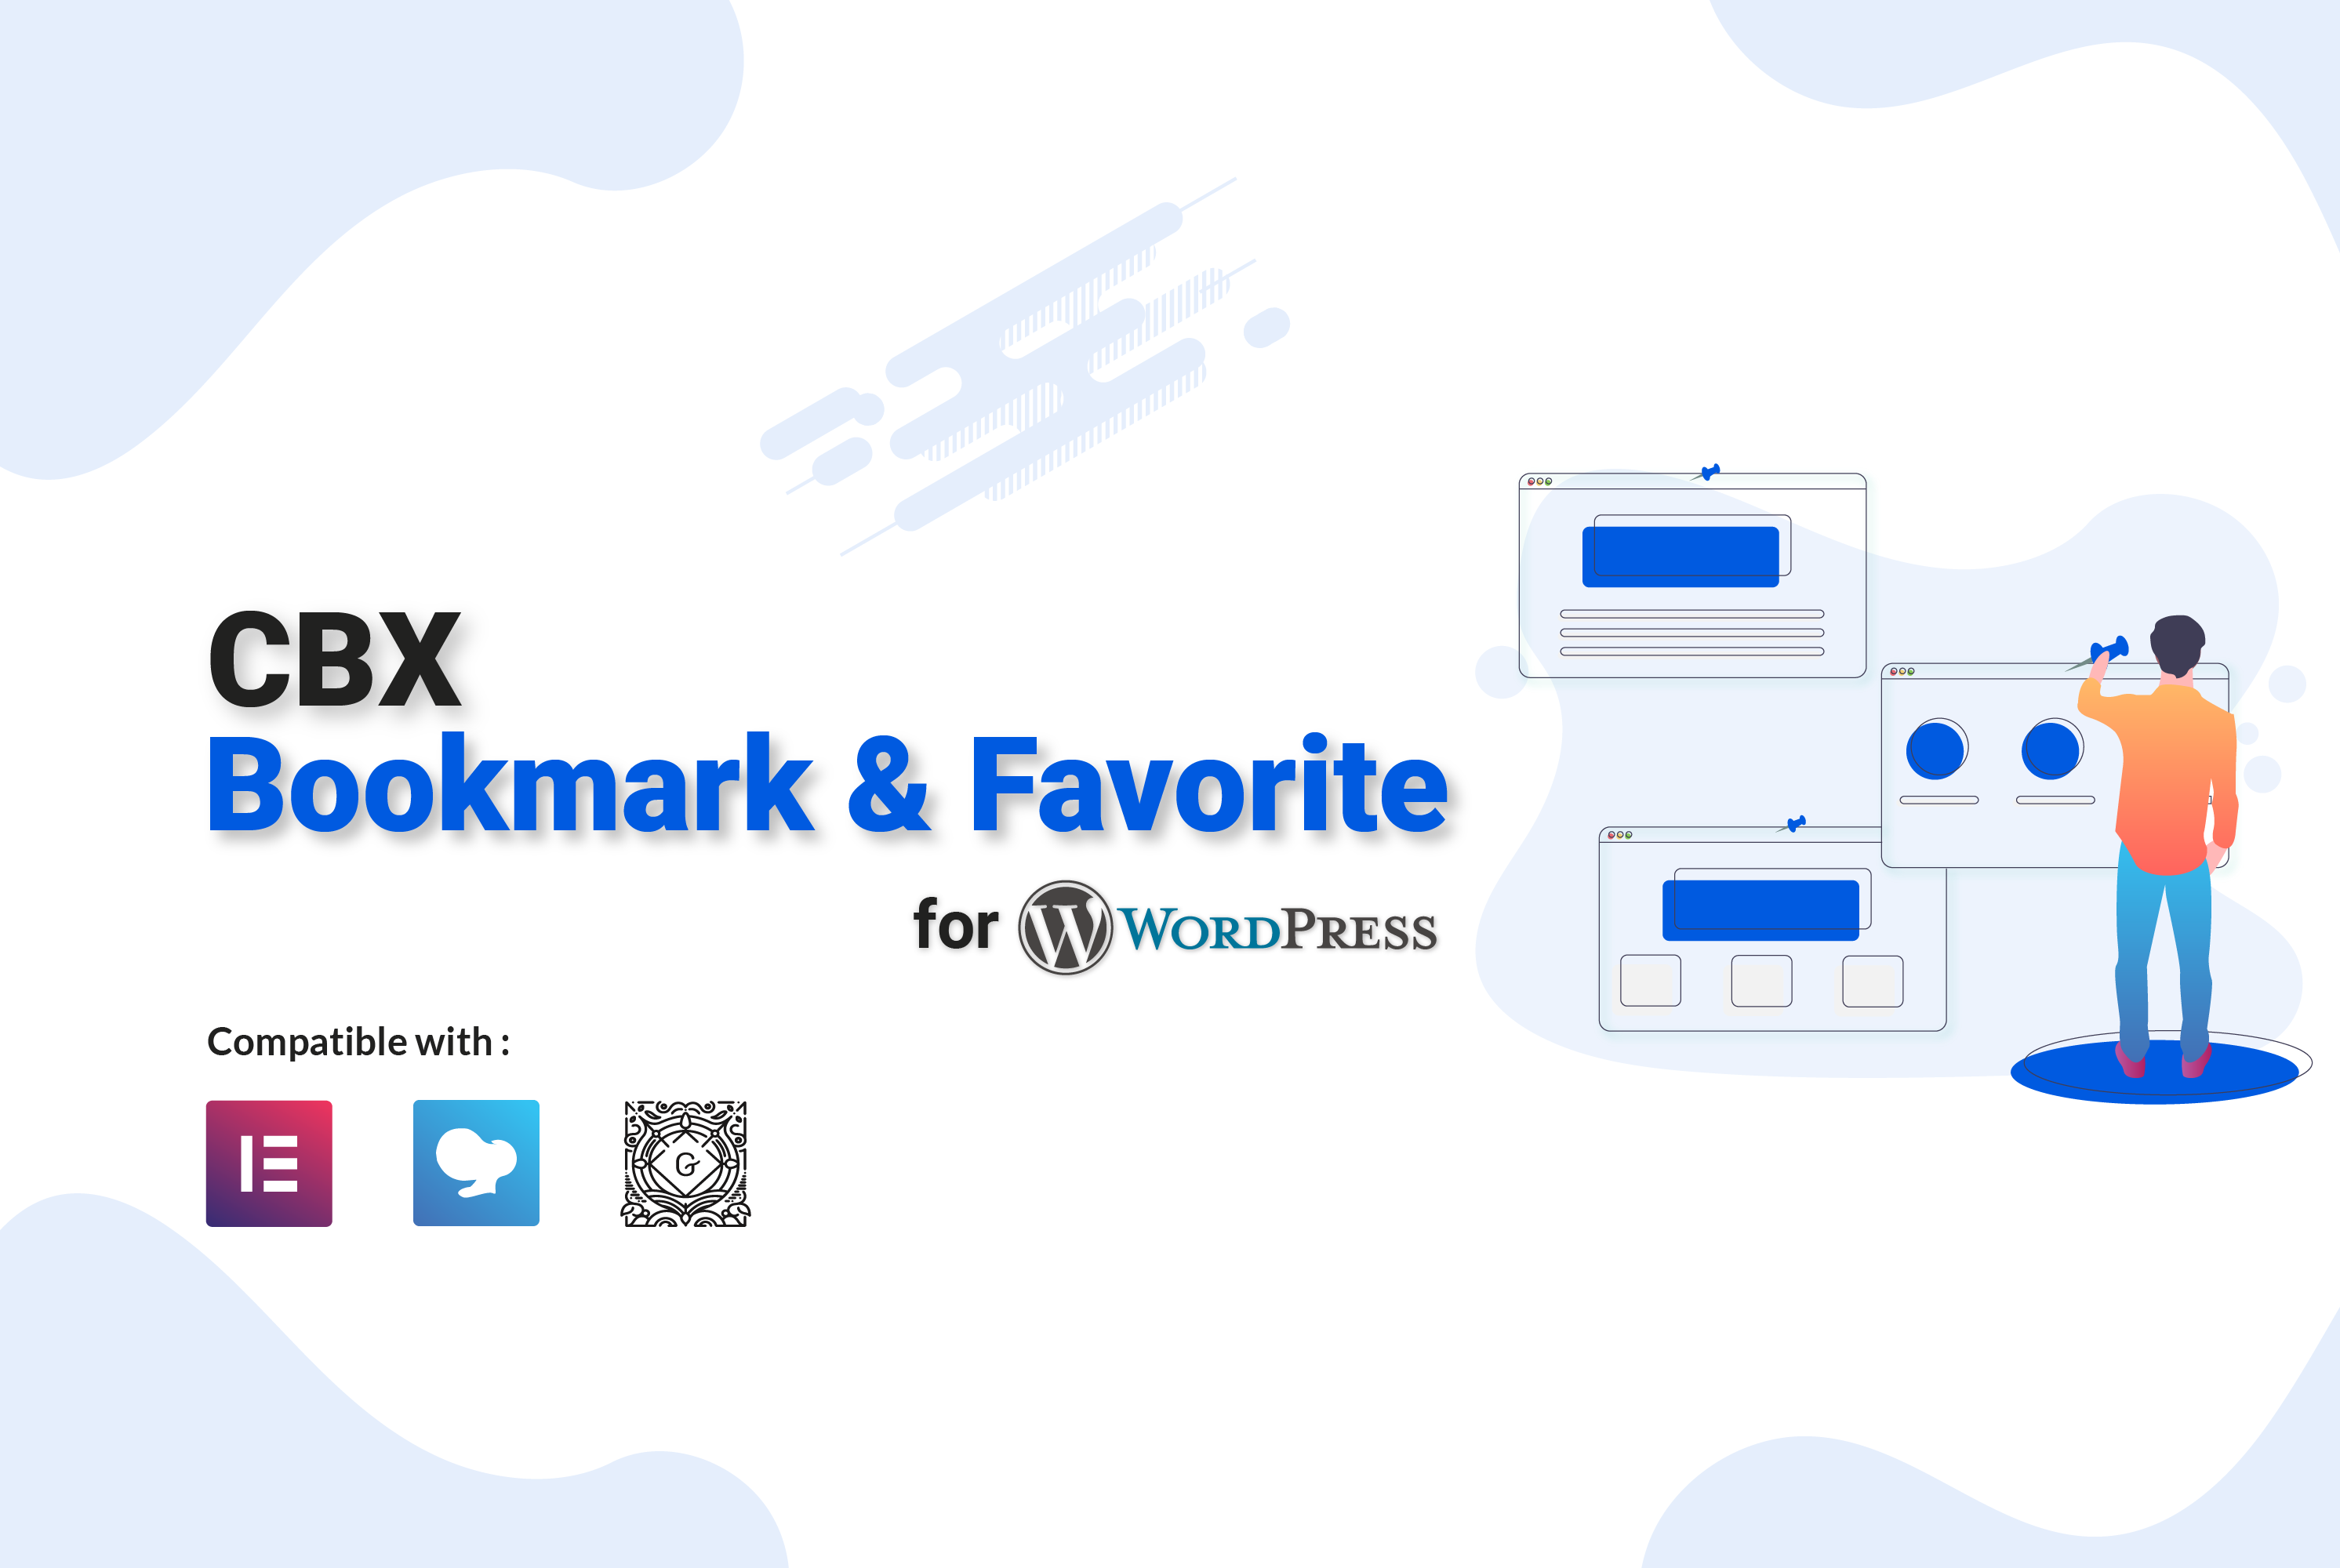 CBX Bookmark & Favorite for WordPress